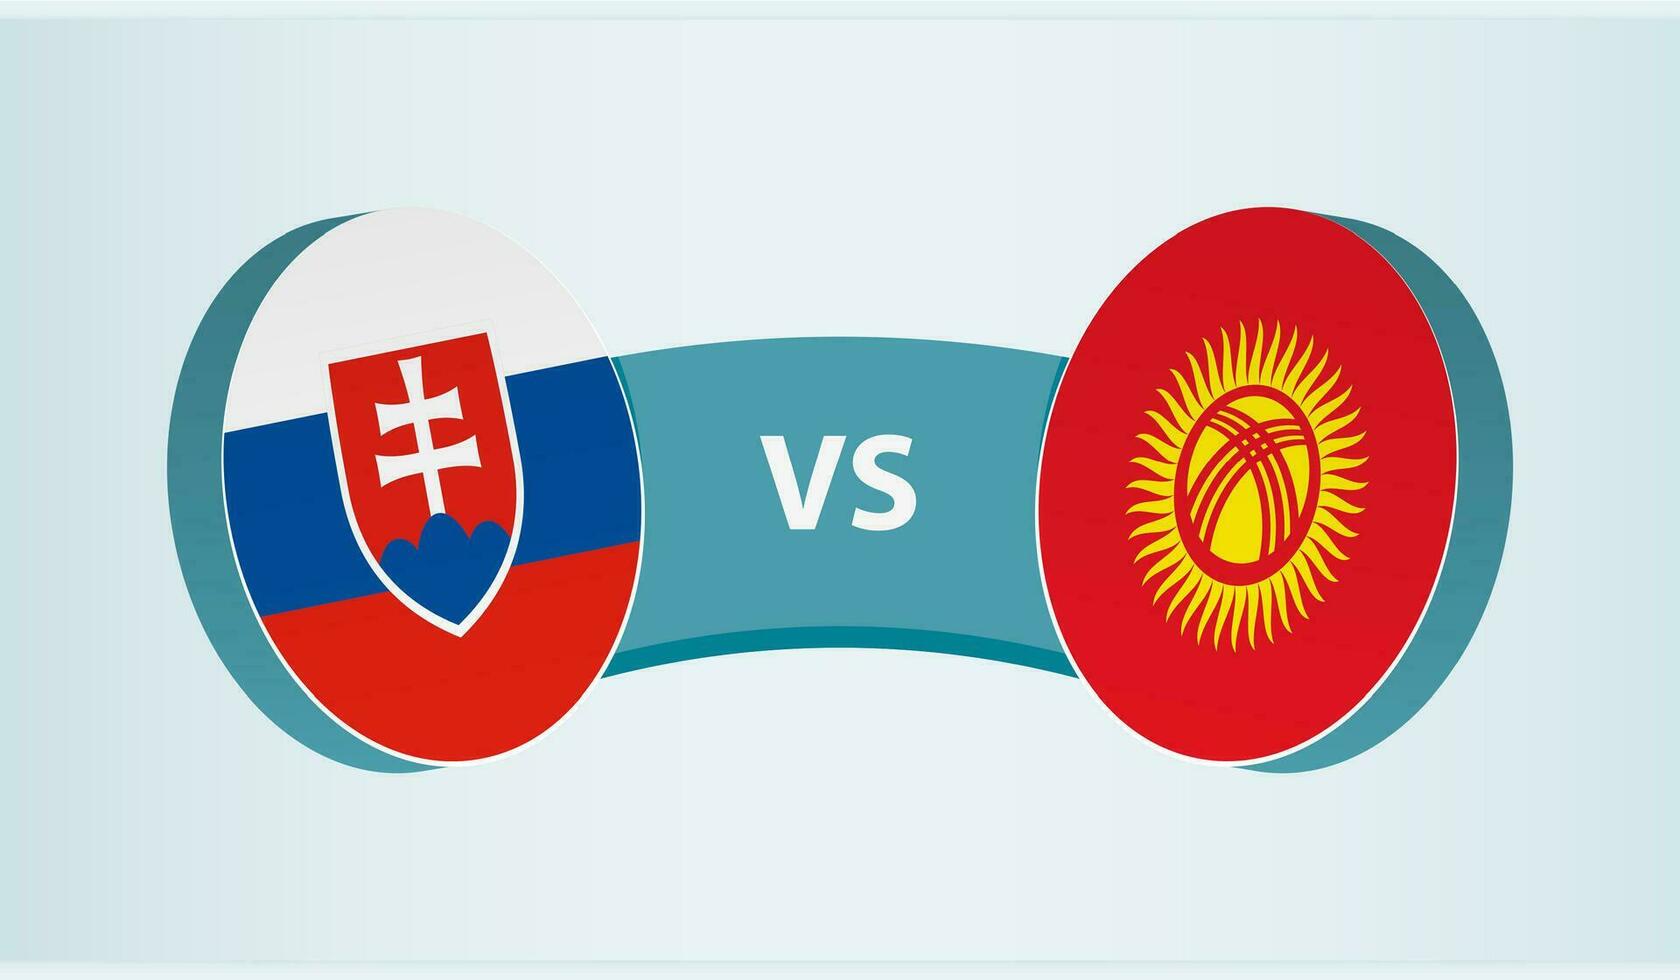 Slovakia versus Kyrgyzstan, team sports competition concept. vector